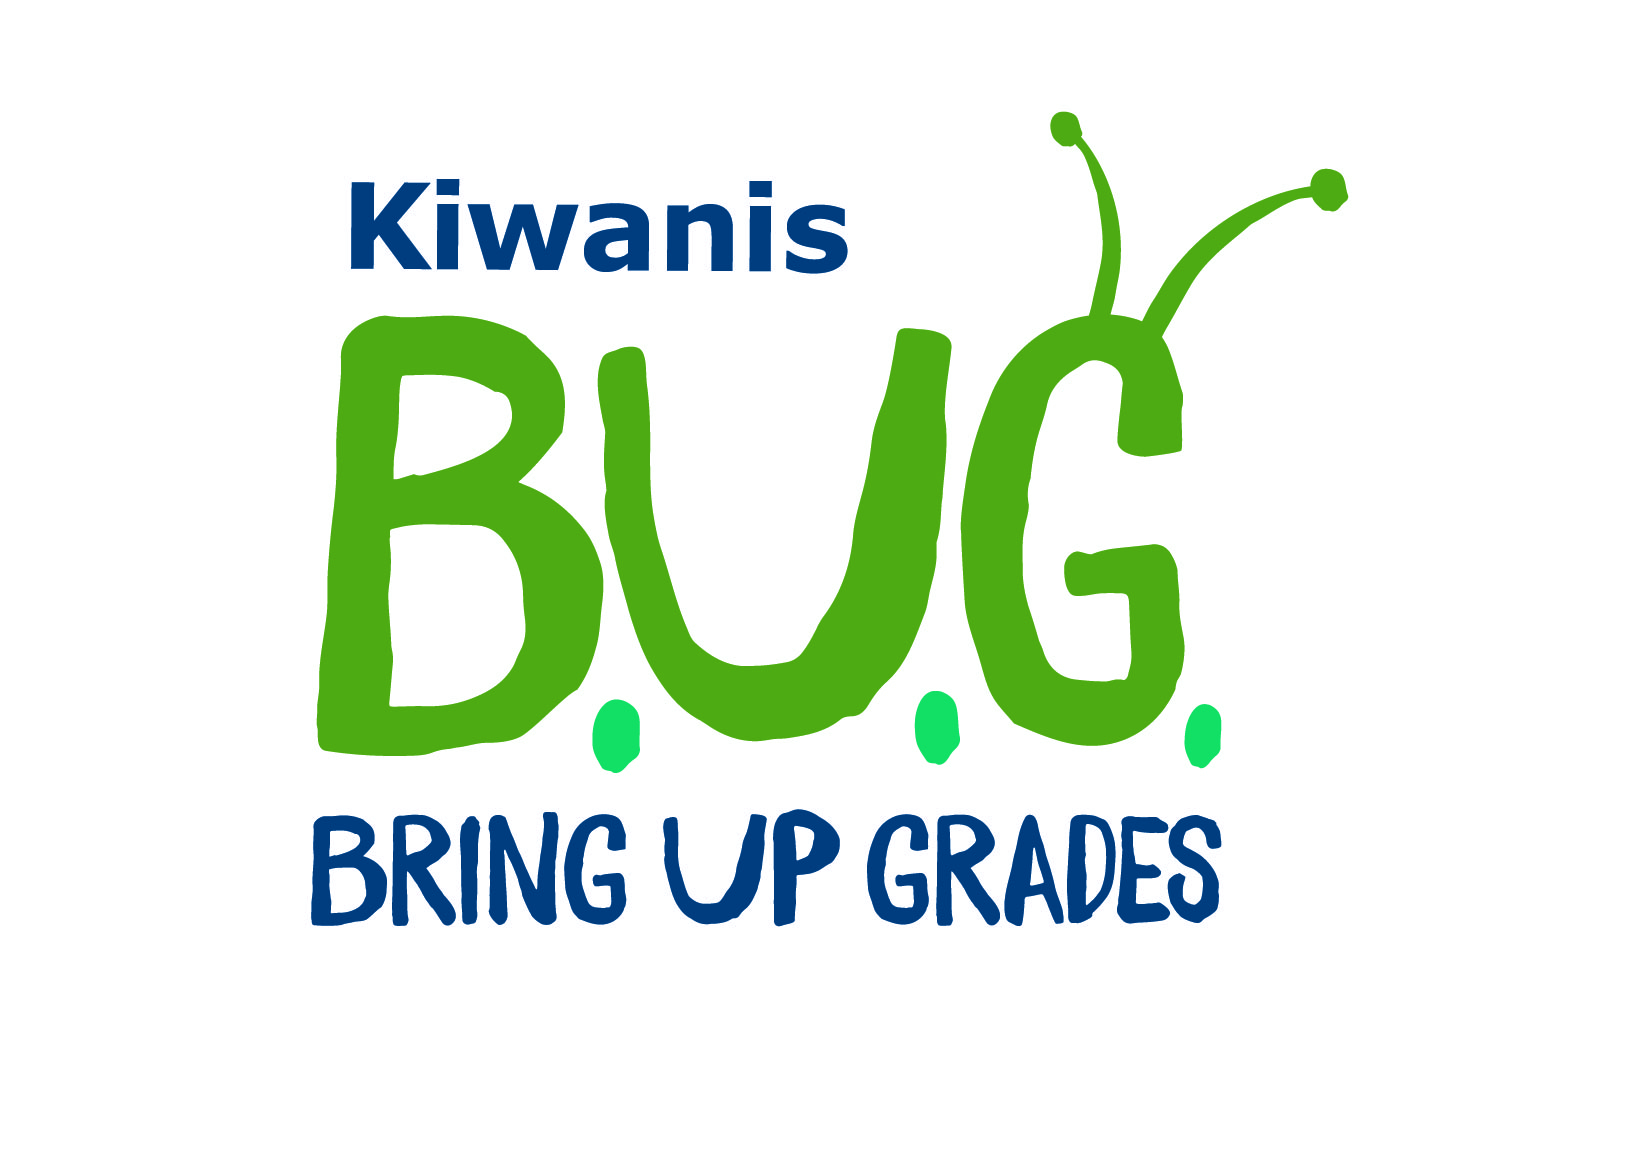 BUG - Bring Up Grades - Kiwanis club of carefree